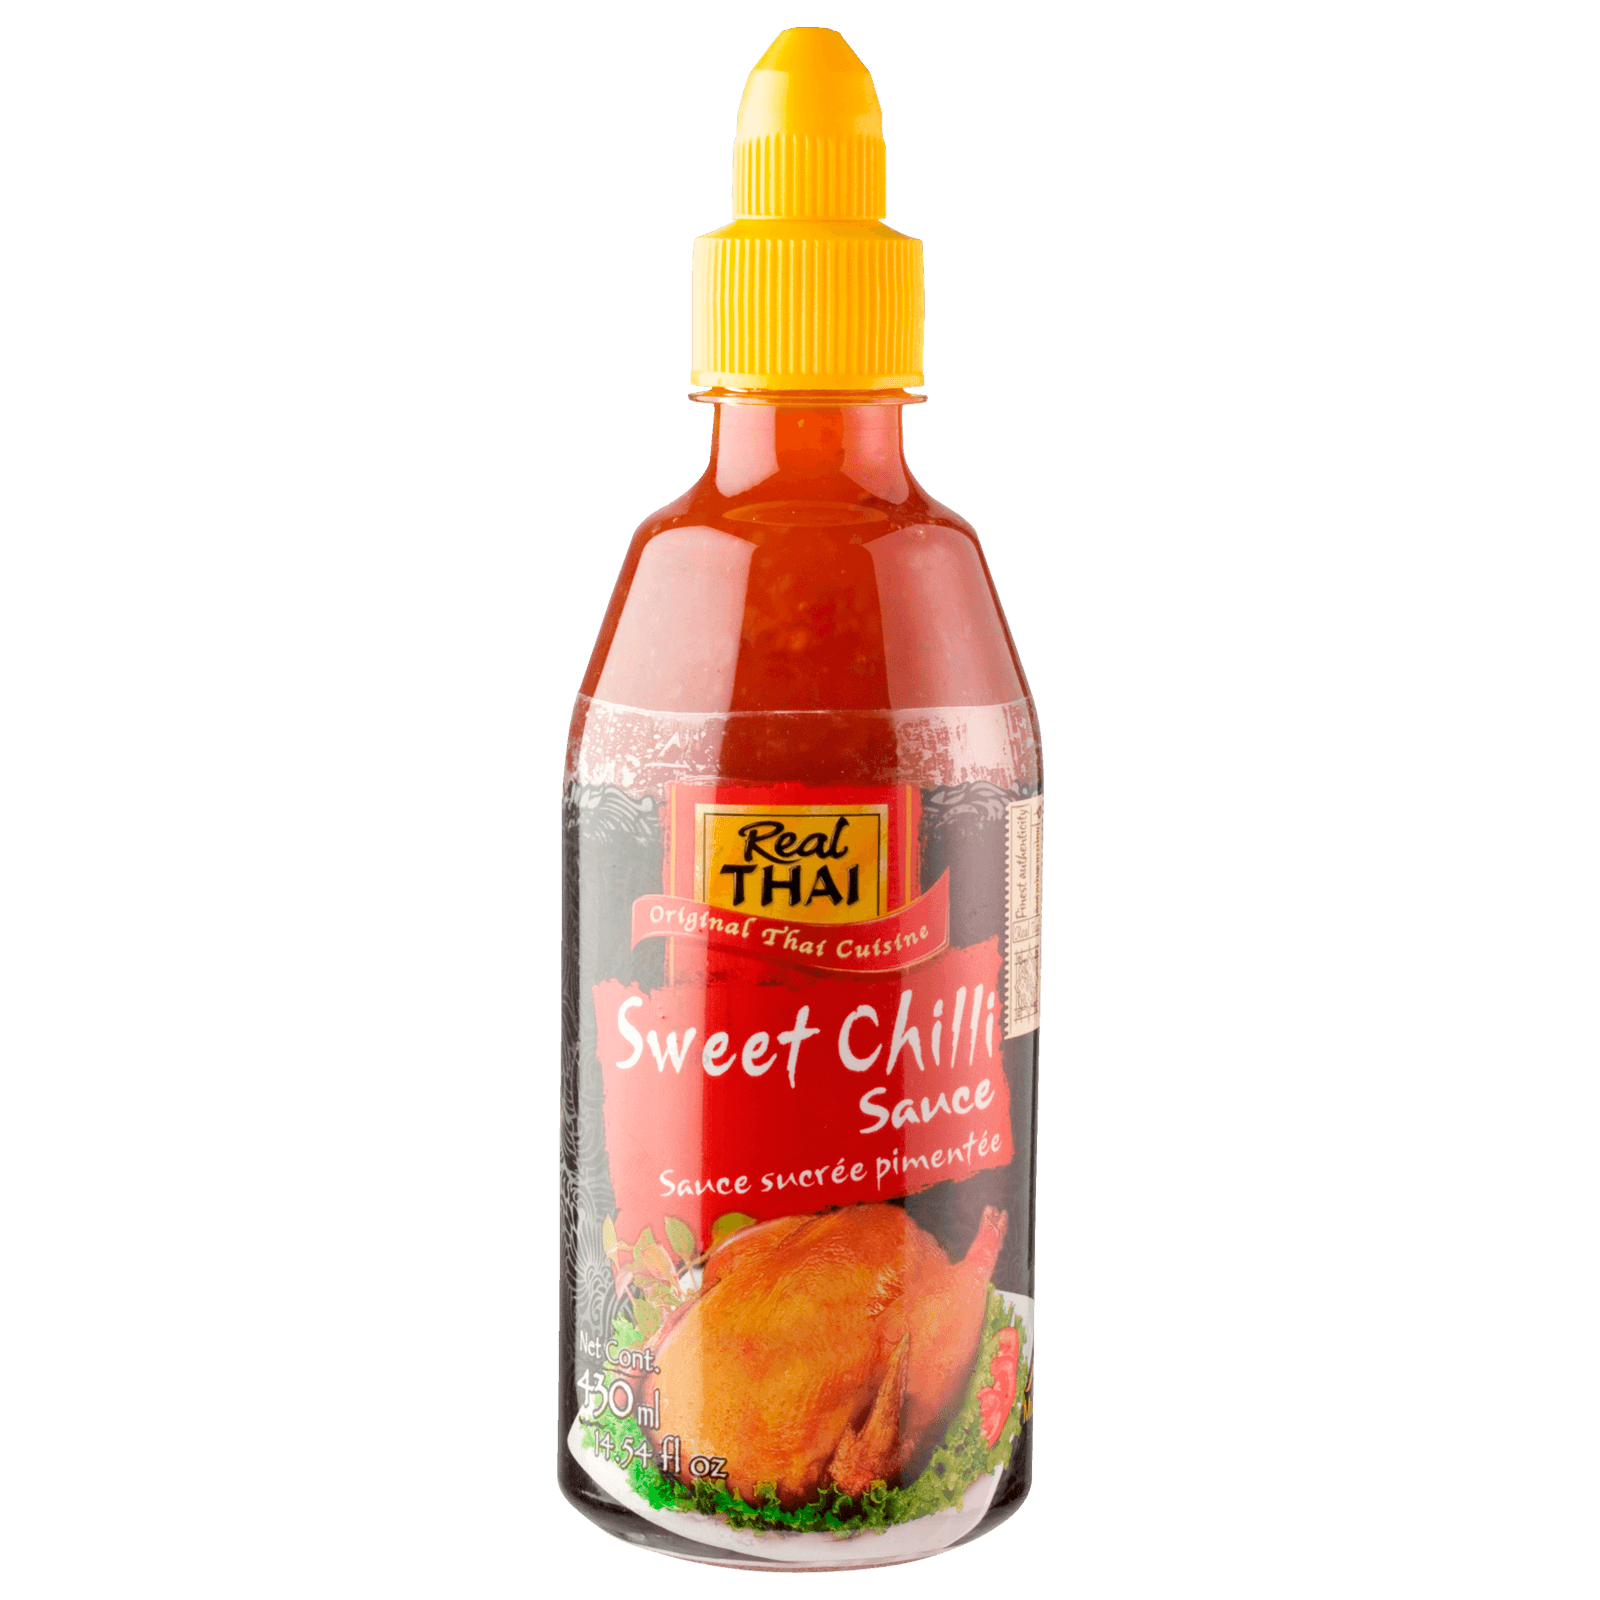 Real Thai Süße Chili-Sauce 430ml  für 4.49 EUR